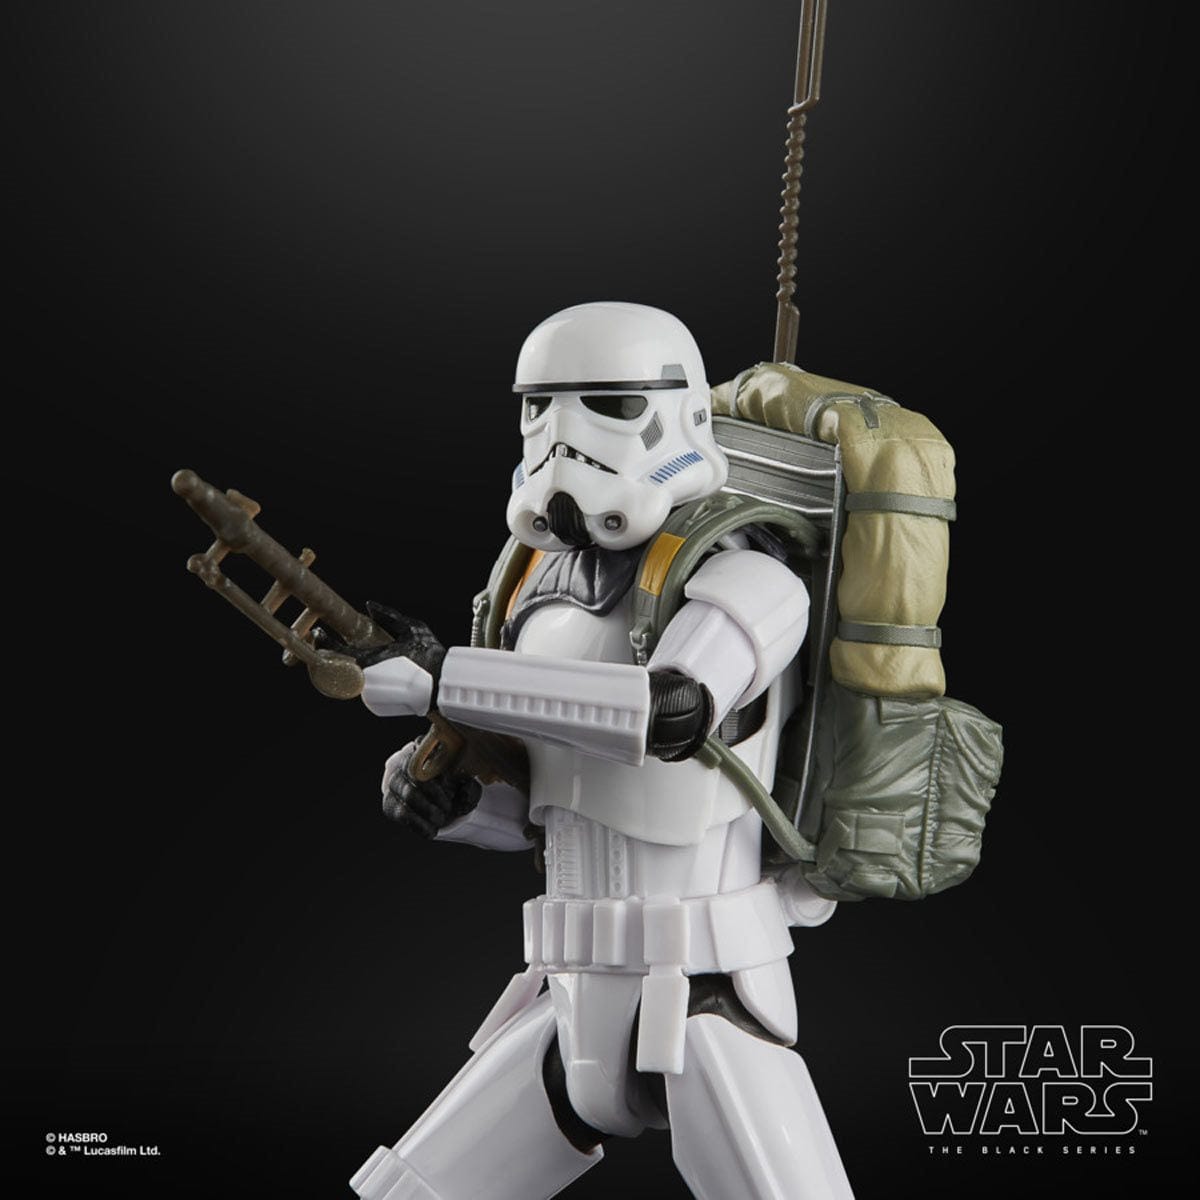 Star Wars The Black Series Stormtrooper Jedha Patrol 6-Inch Action Figure pose